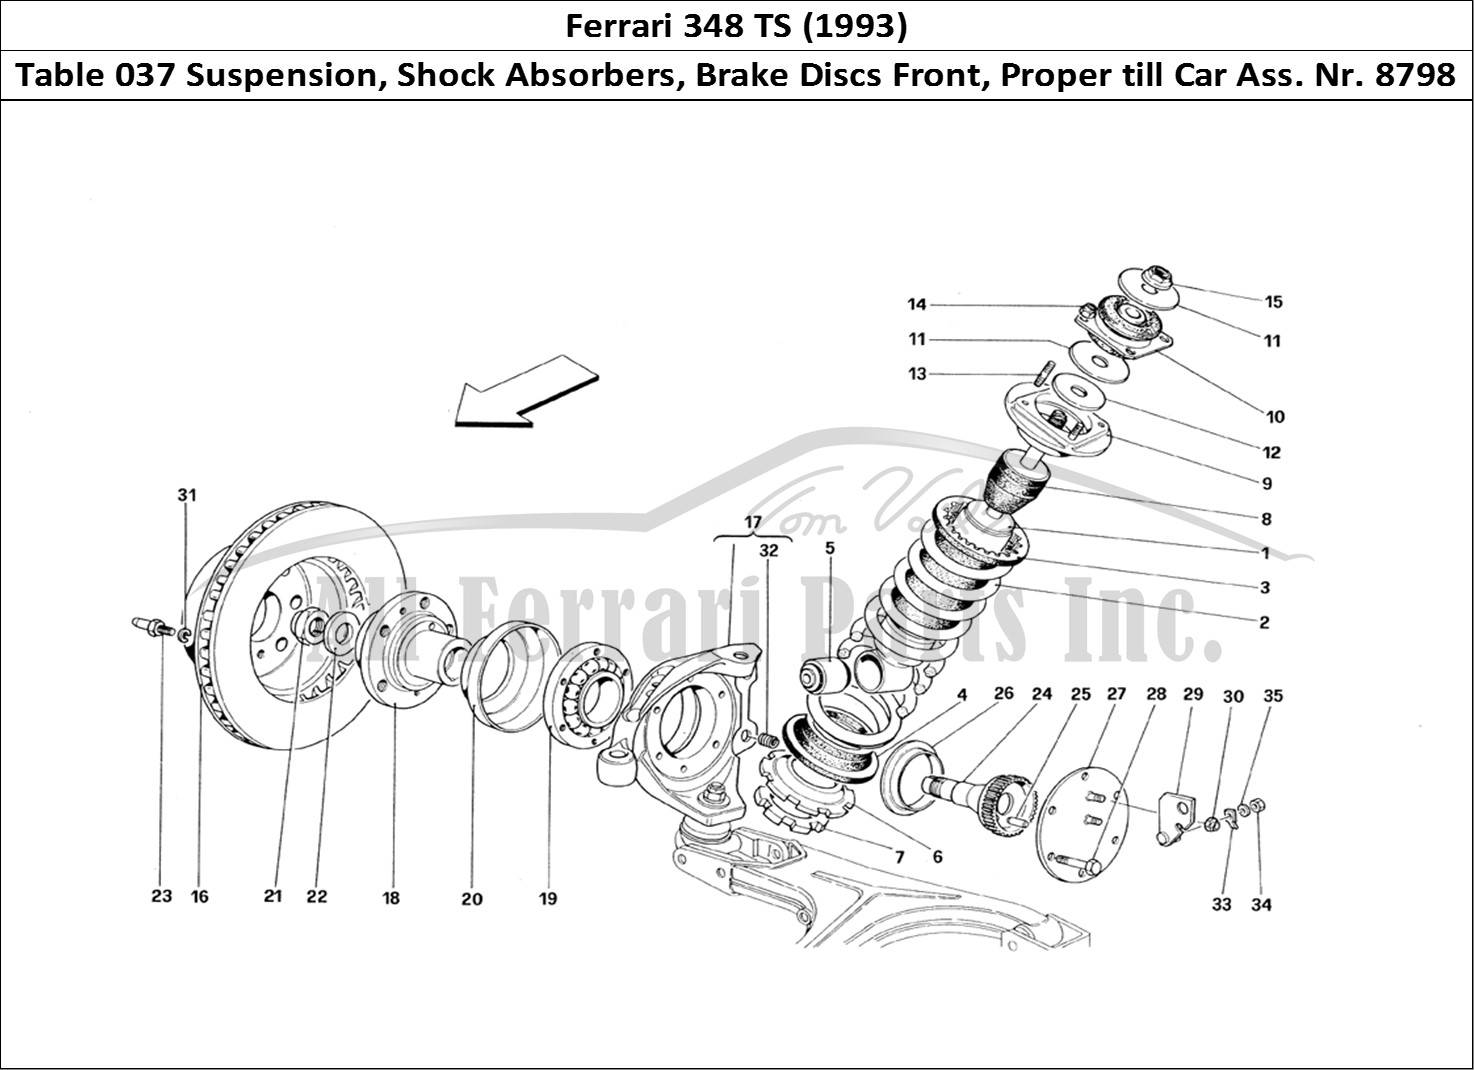 Ferrari Parts Ferrari 348 TB (1993) Page 037 Front Suspension - Shock